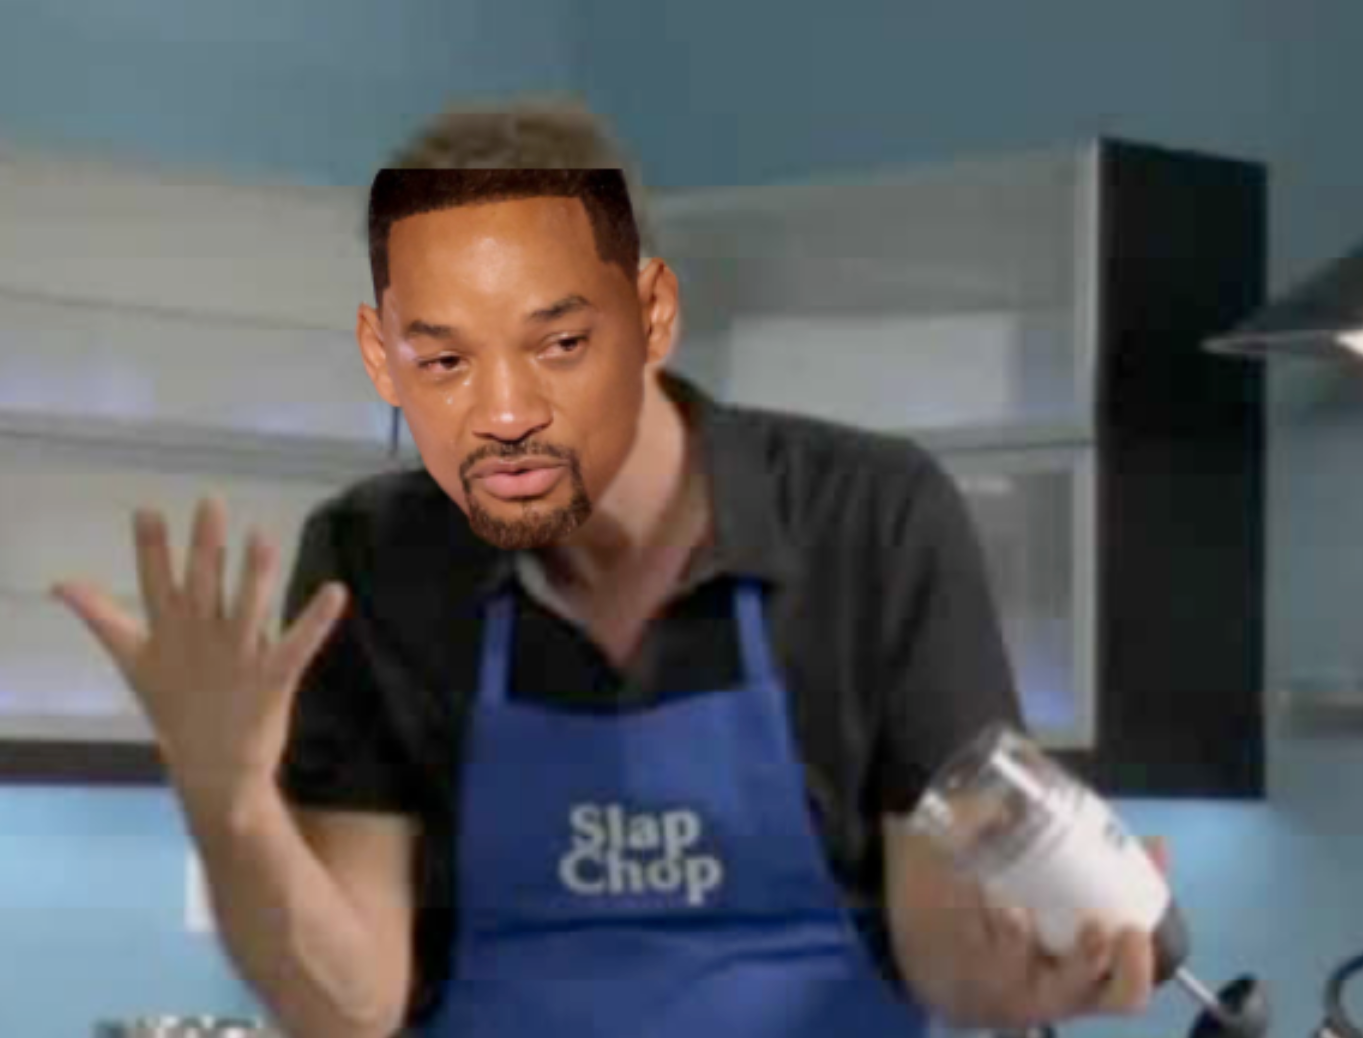 Will Smith Slap Chop Blank Meme Template